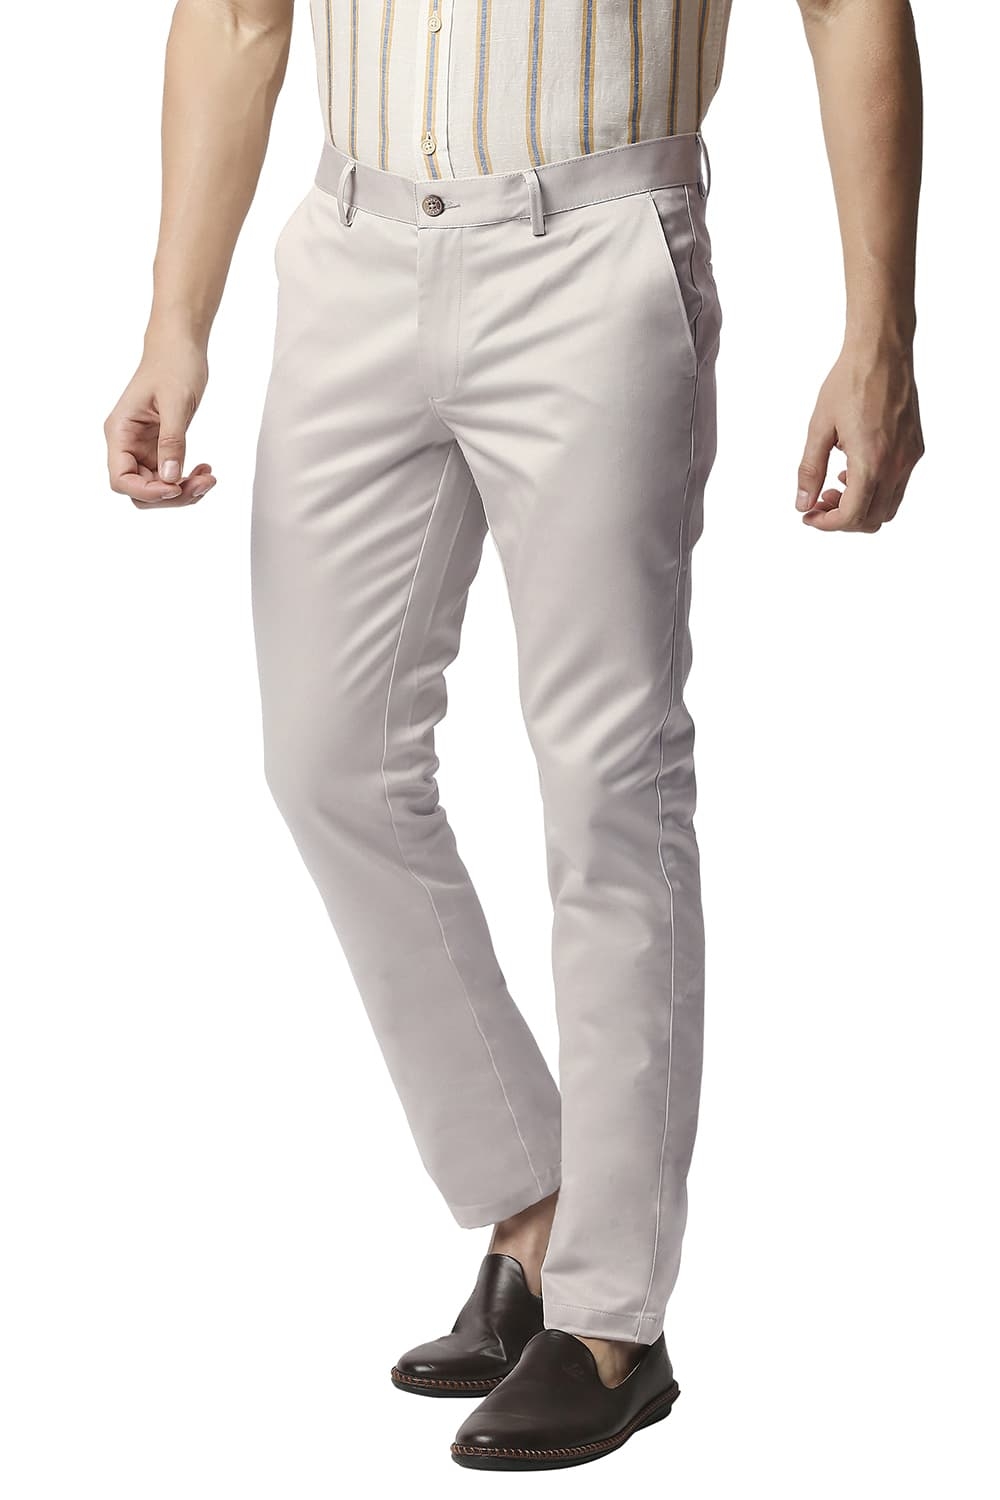 Basics | Basics Tapered Fit Light Grey Satin Trousers 3